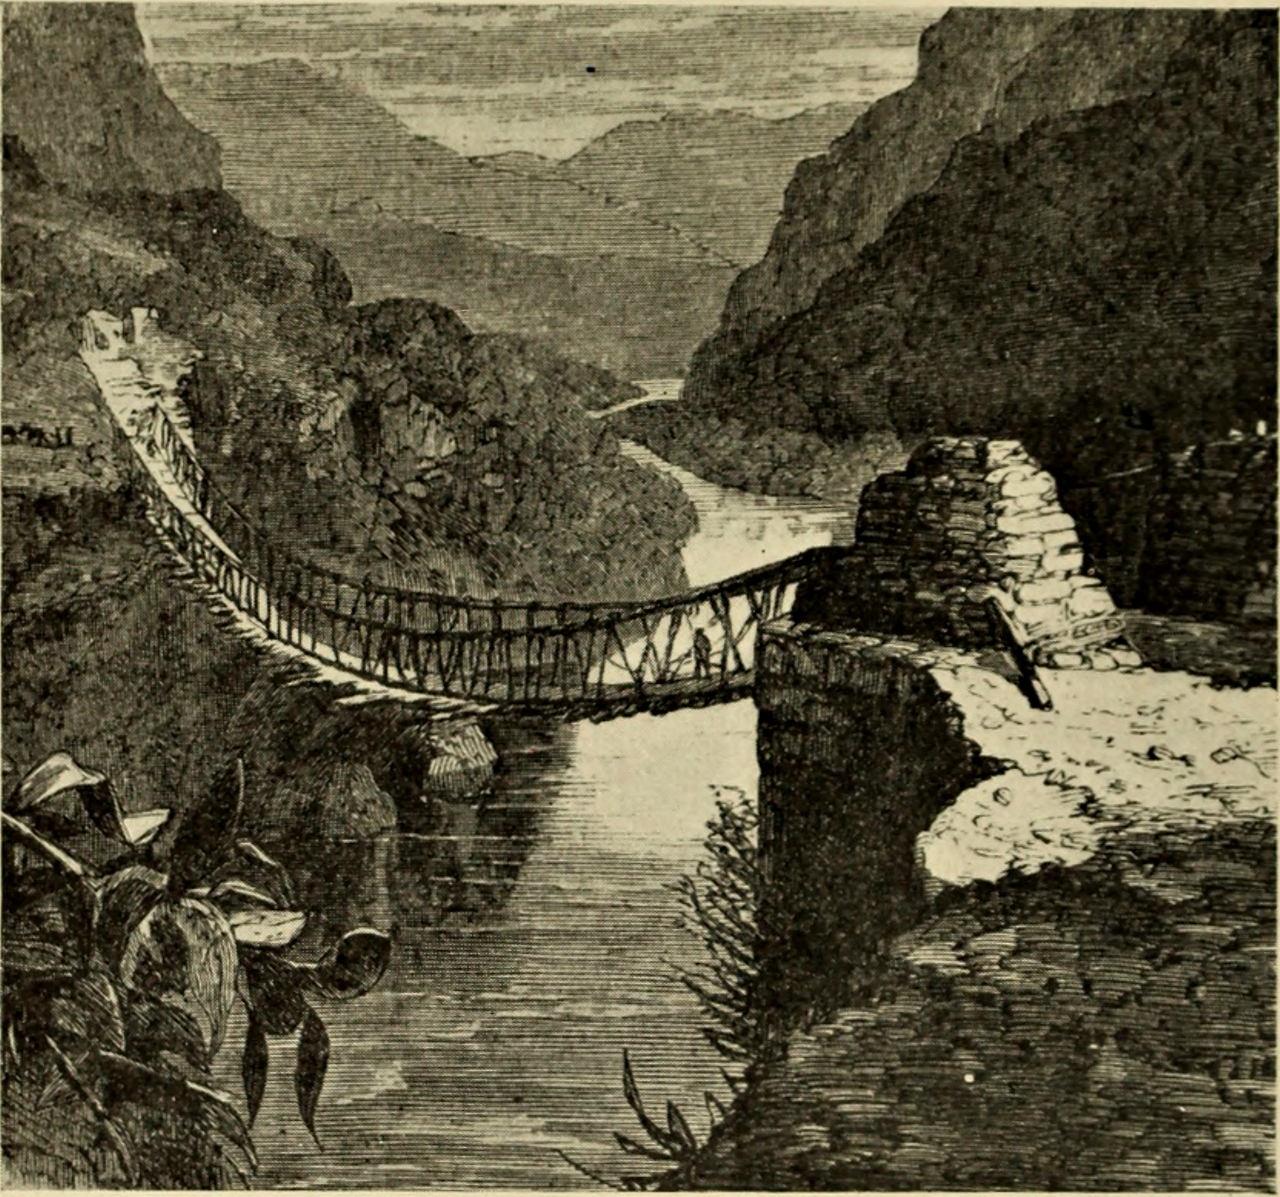  Illustrasjon av en taubro i' Old Civilizations Of Inca Land '(1924) (Via Internet Archive Book Images)